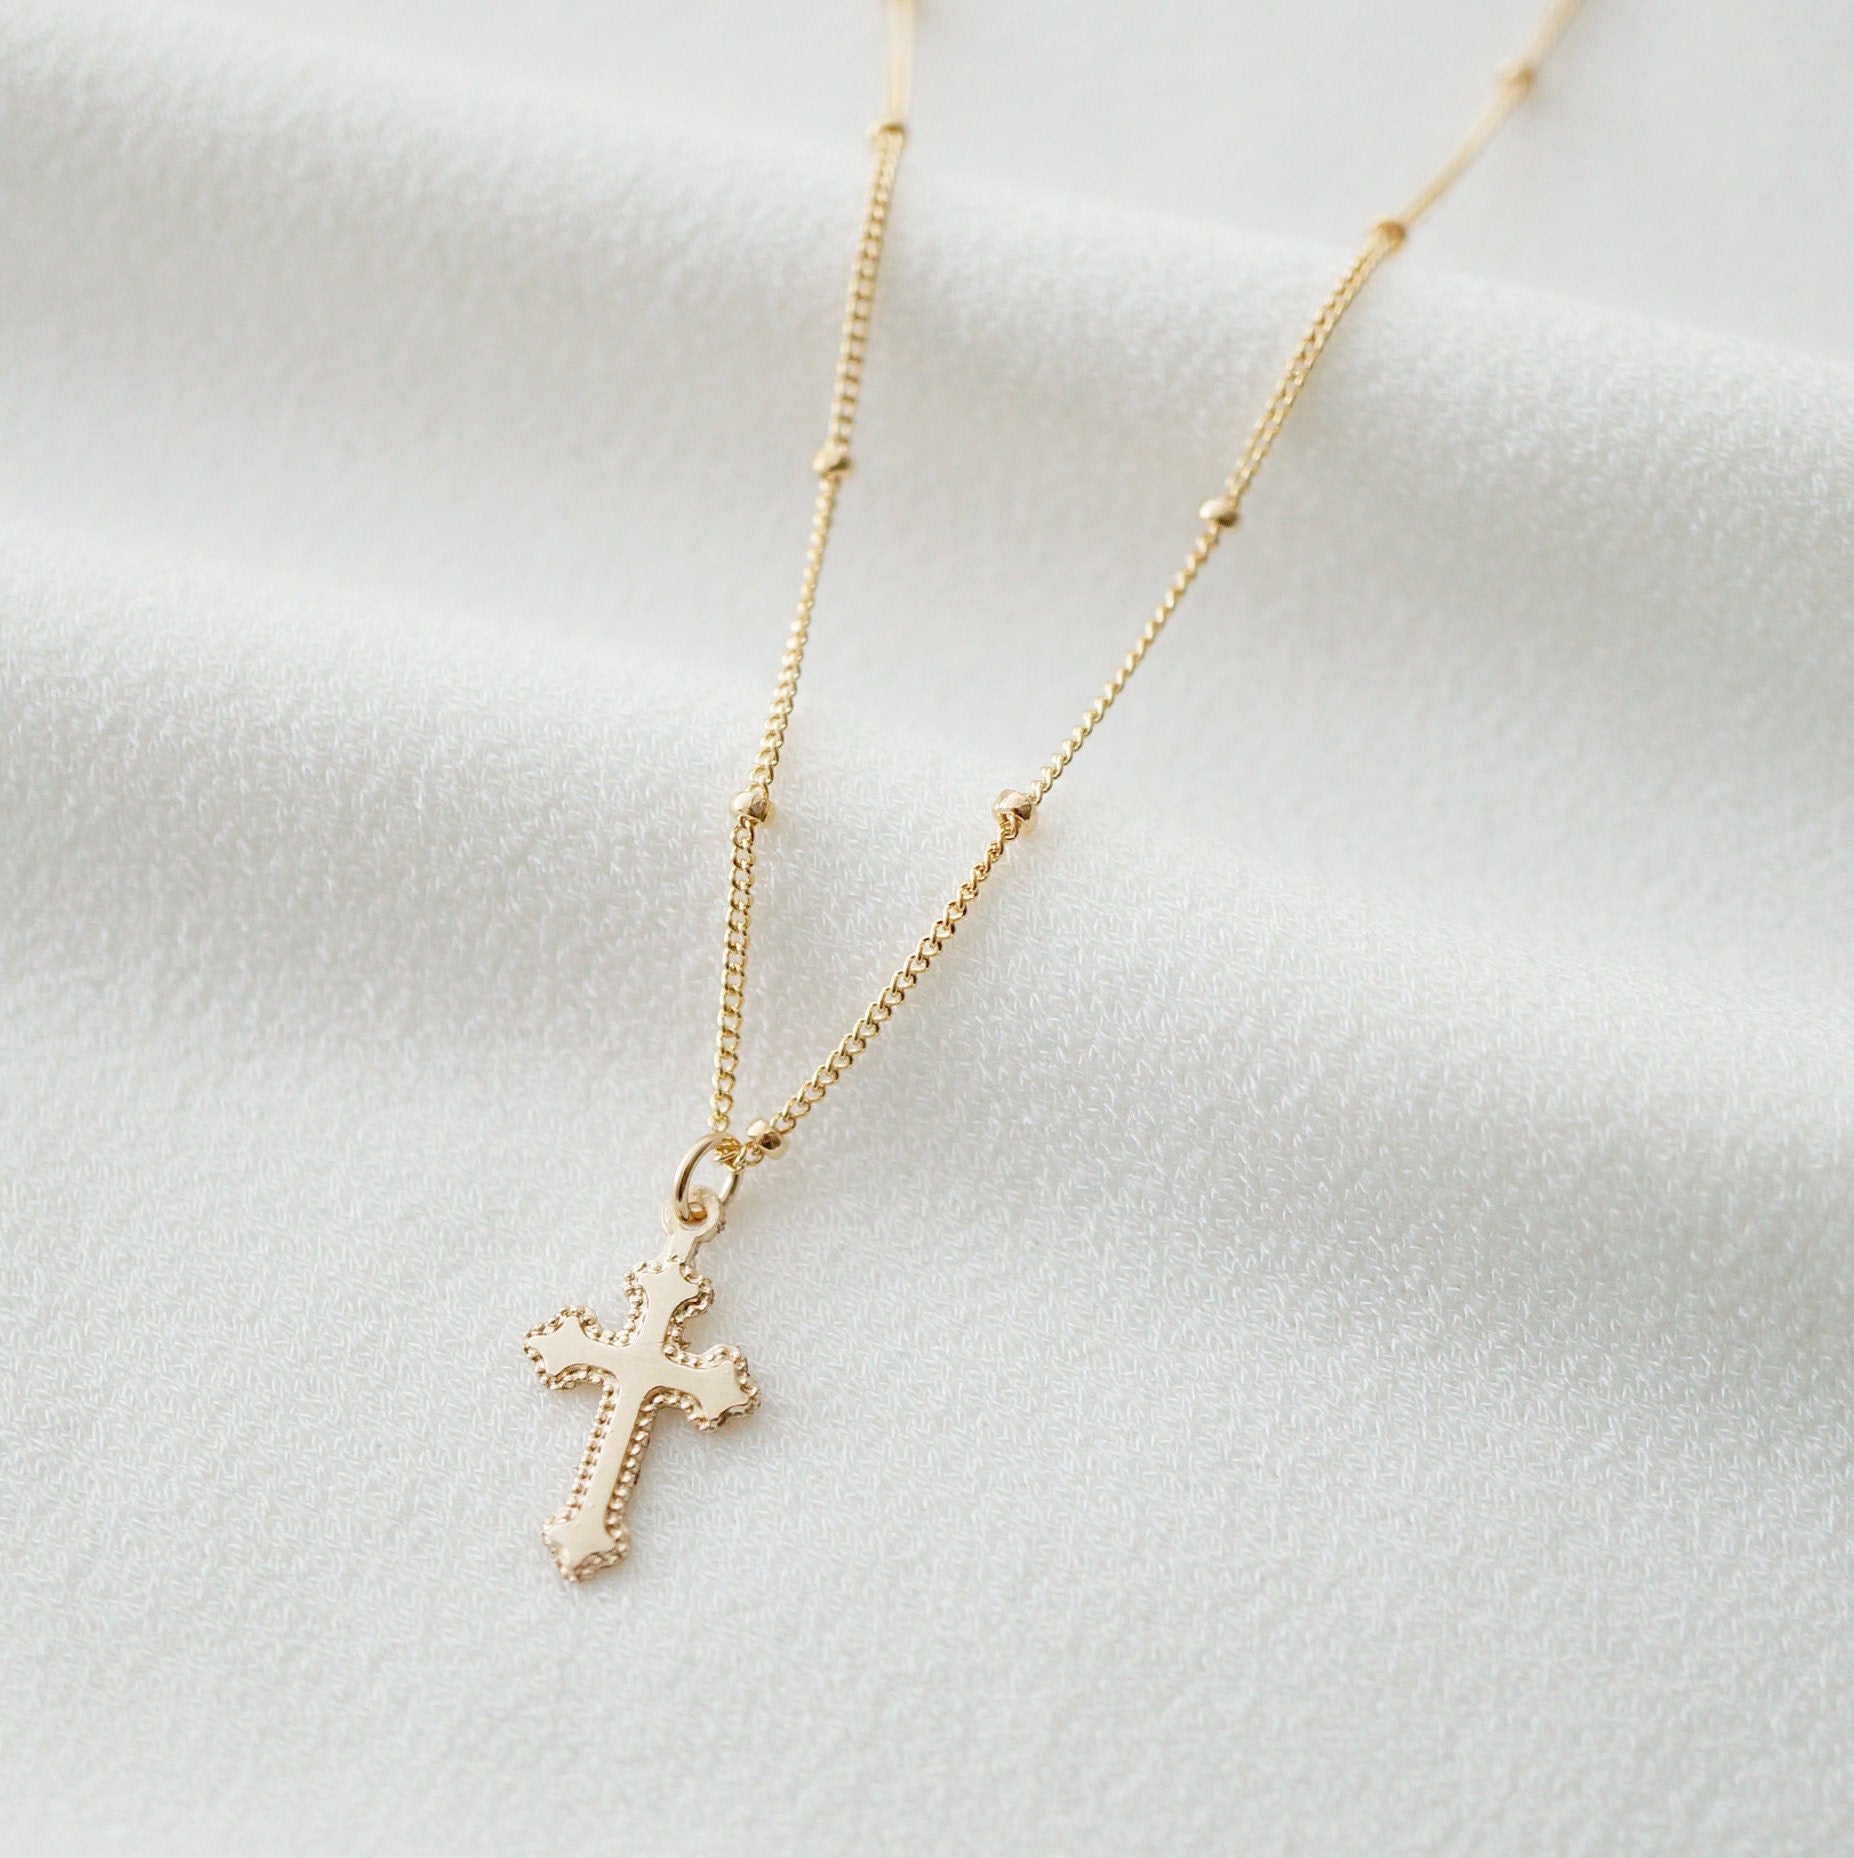 Real 14k gold cross pendant, religious necklace, crucifix jesus charm  pendant | eBay